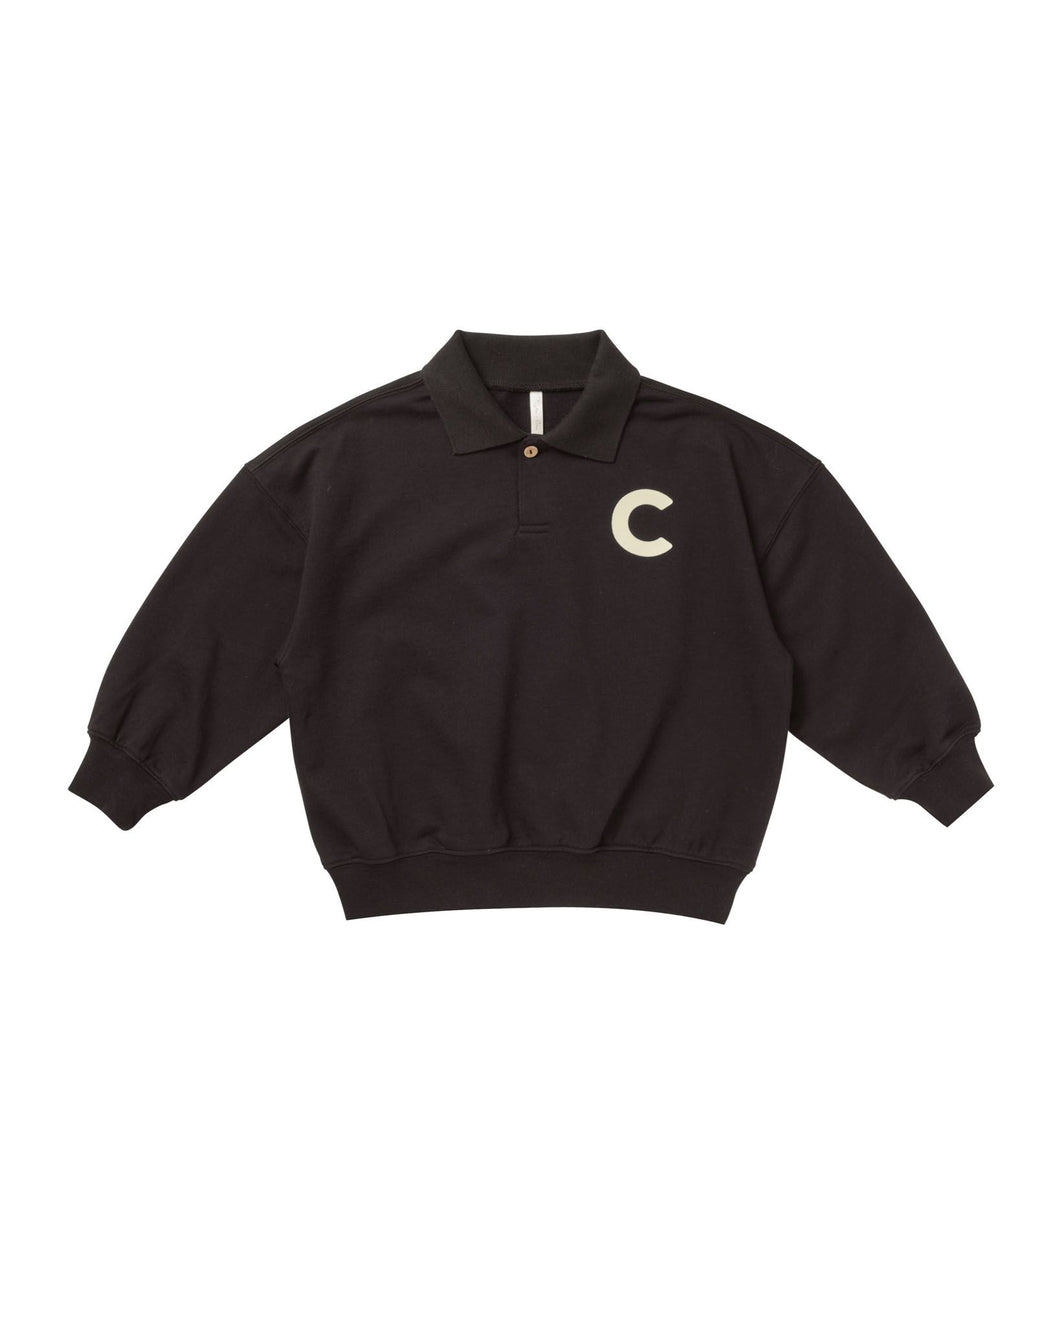 Collared Sweatshirt - Black - SIZE 10/12 YR